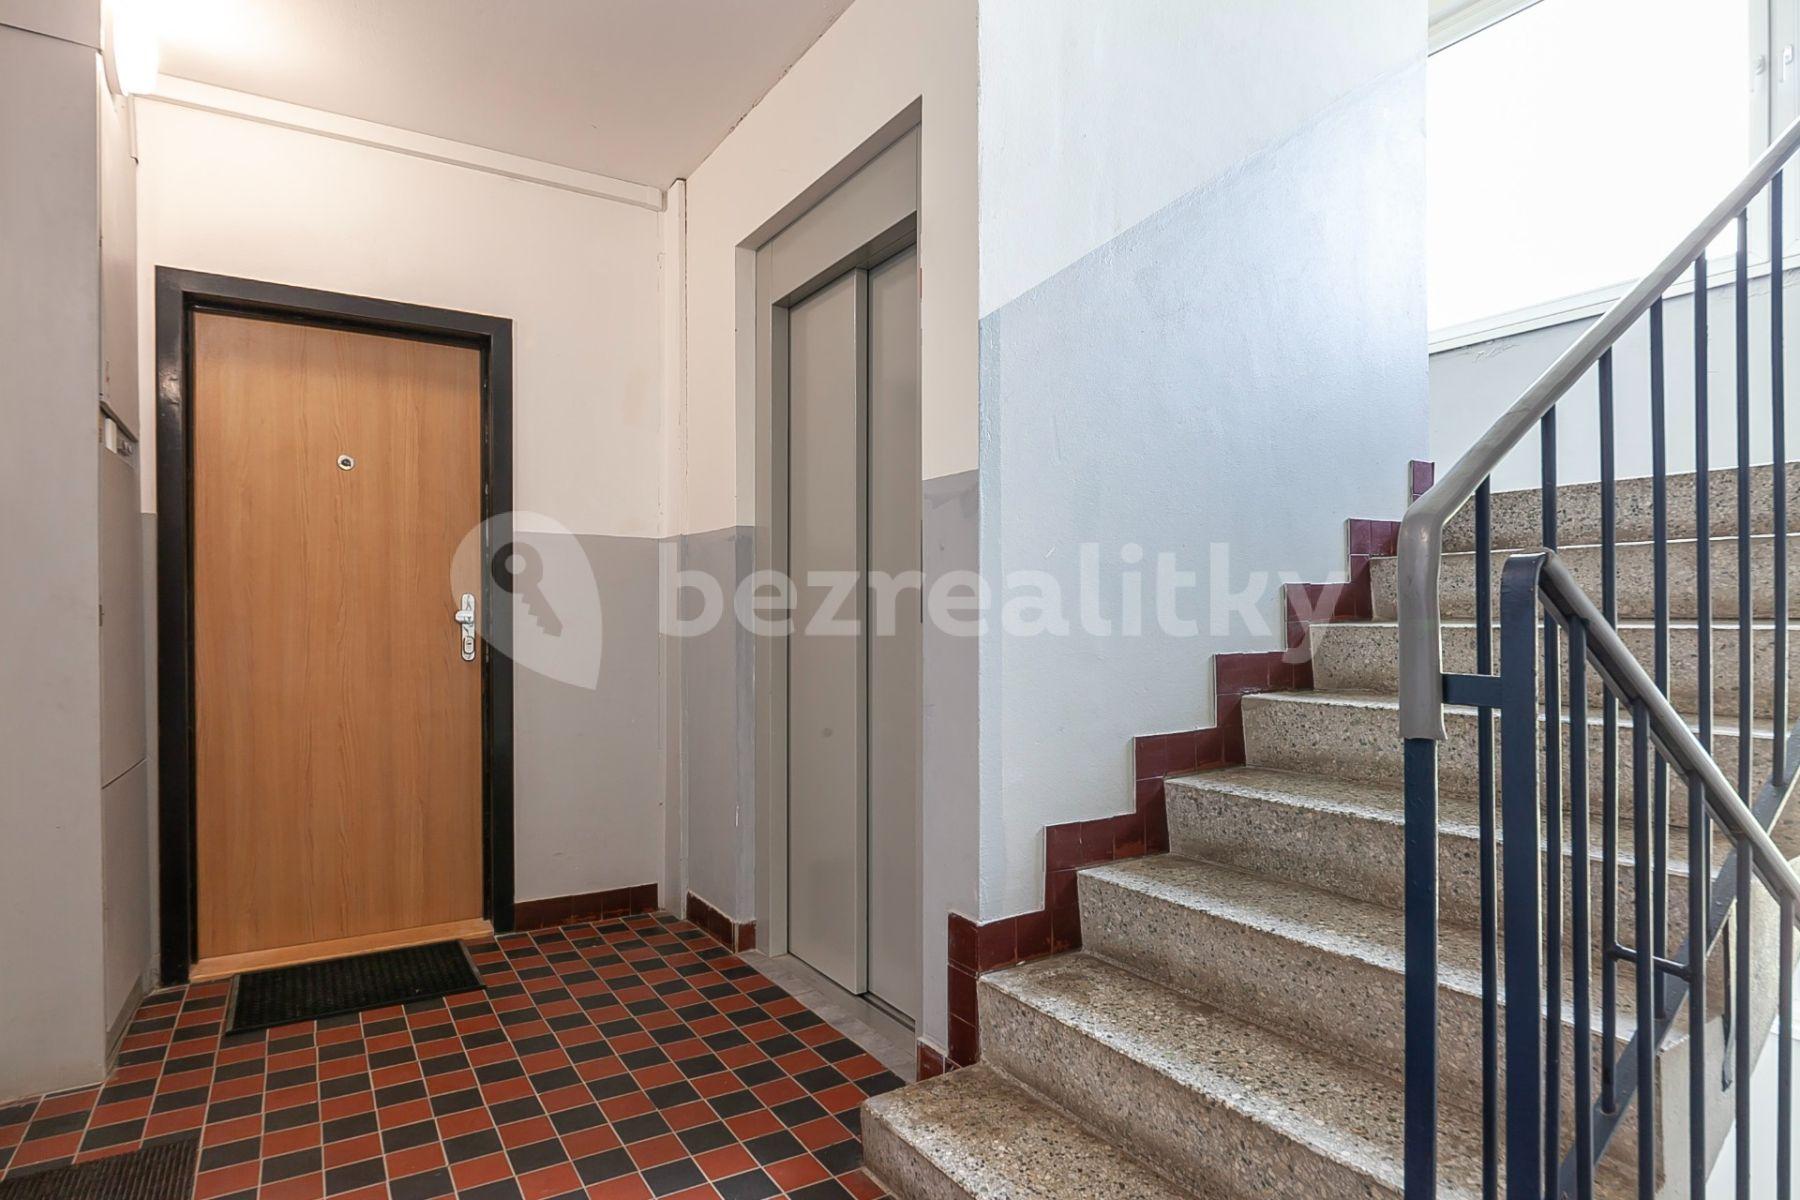 1 bedroom with open-plan kitchen flat to rent, 42 m², Krškova, Prague, Prague